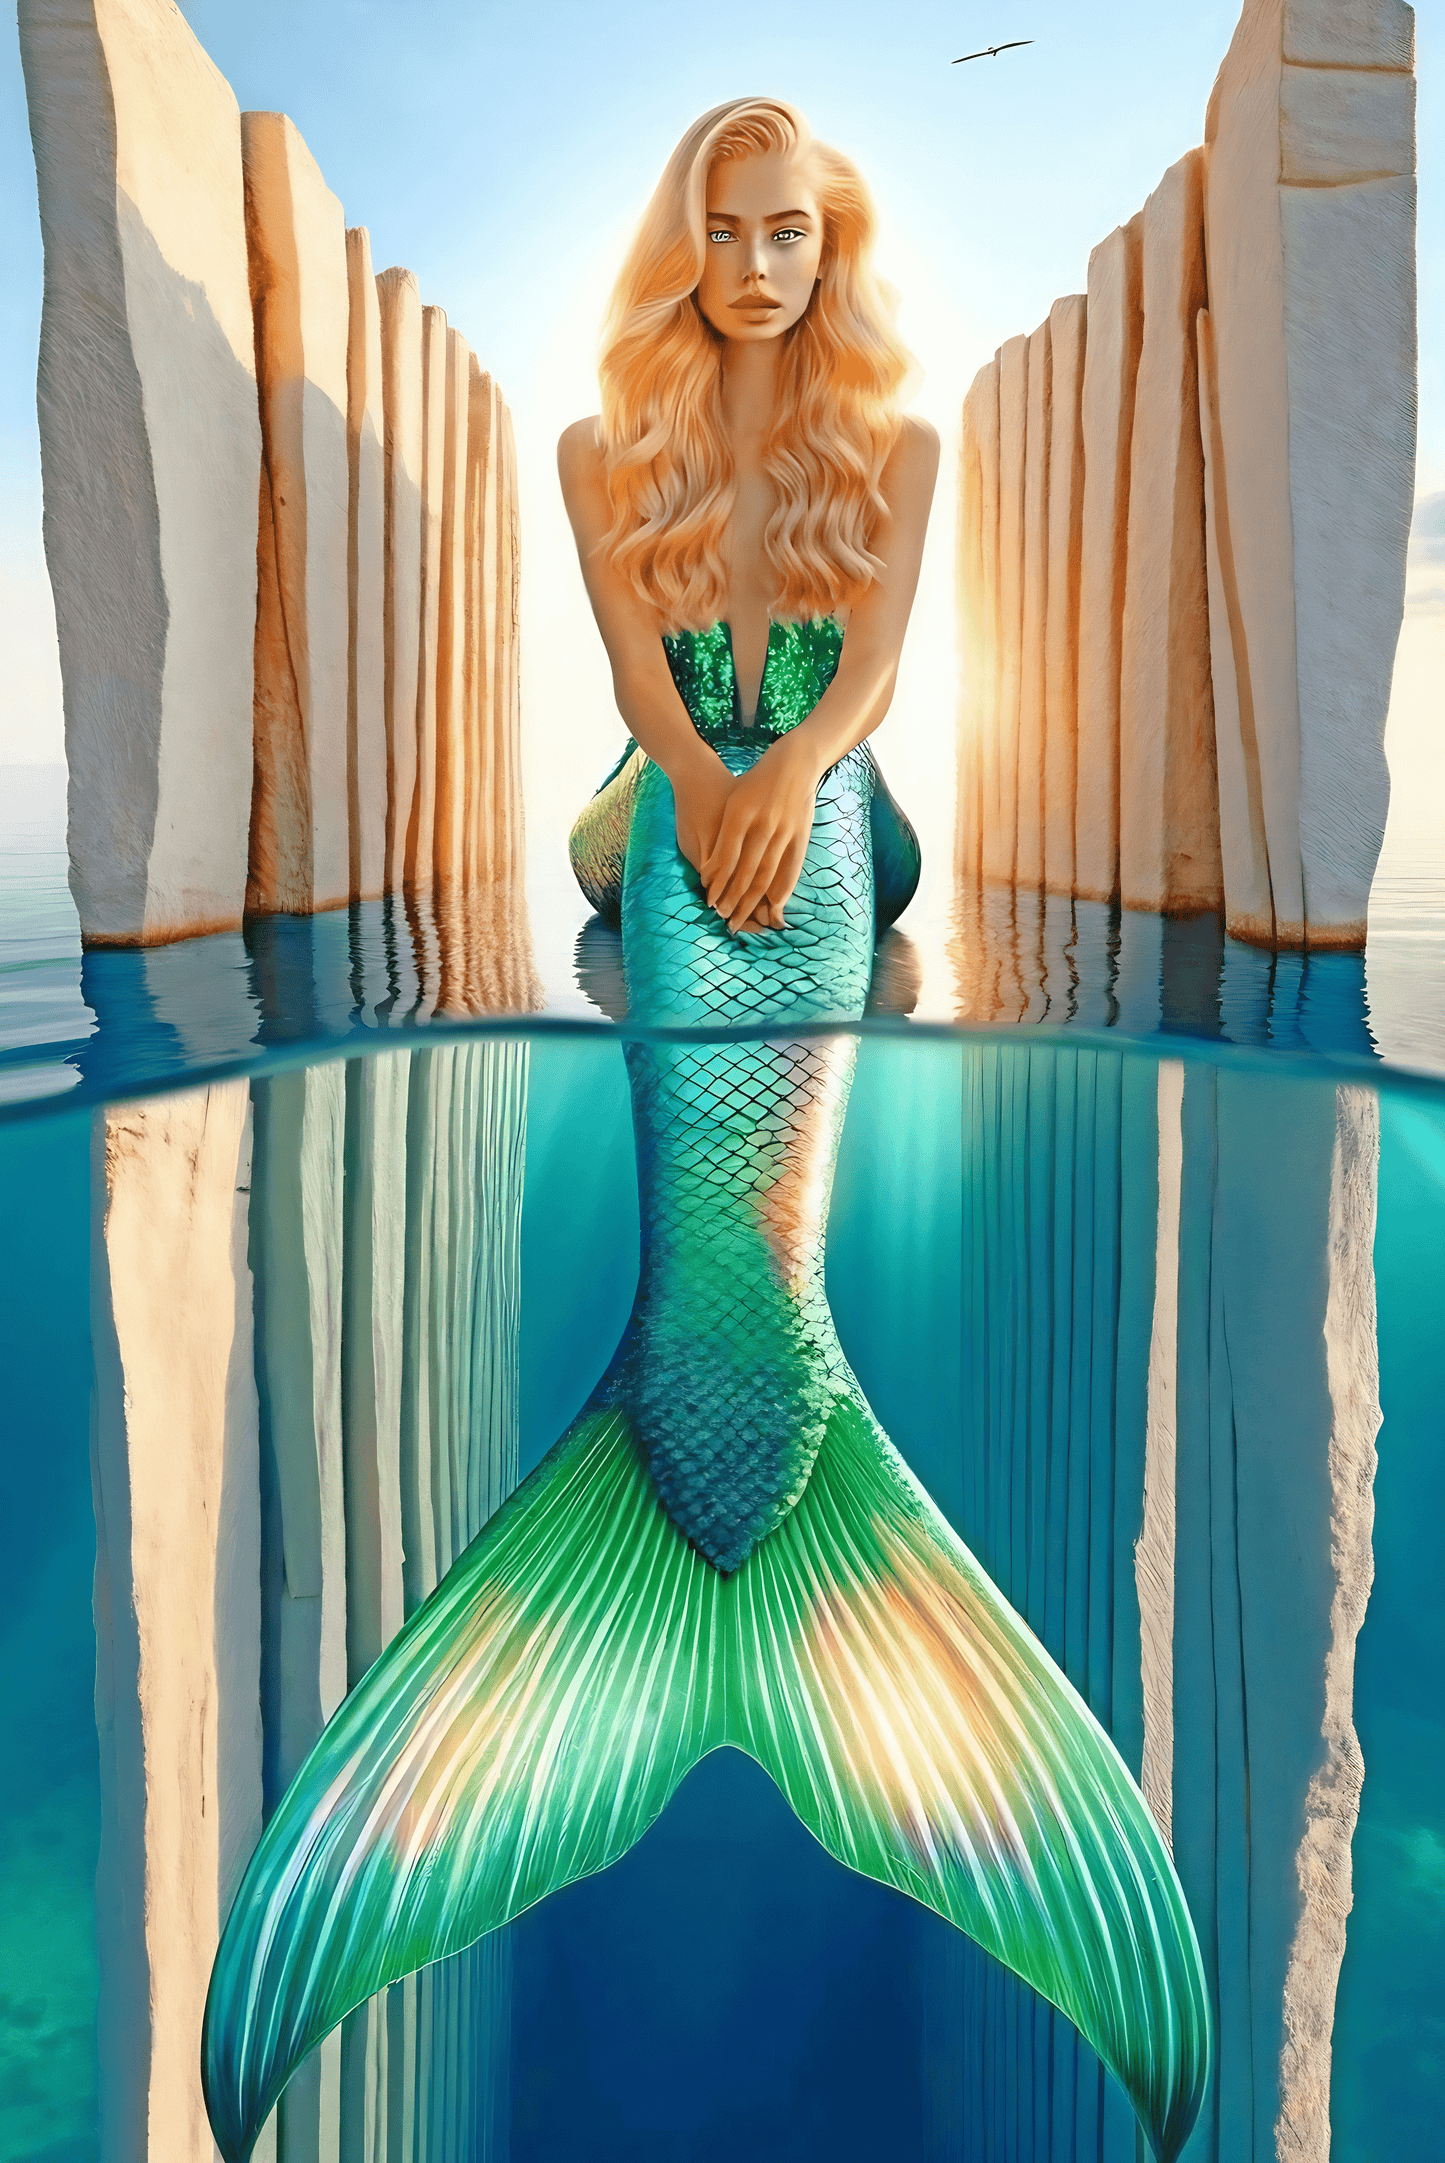 Mermaid in & out of water